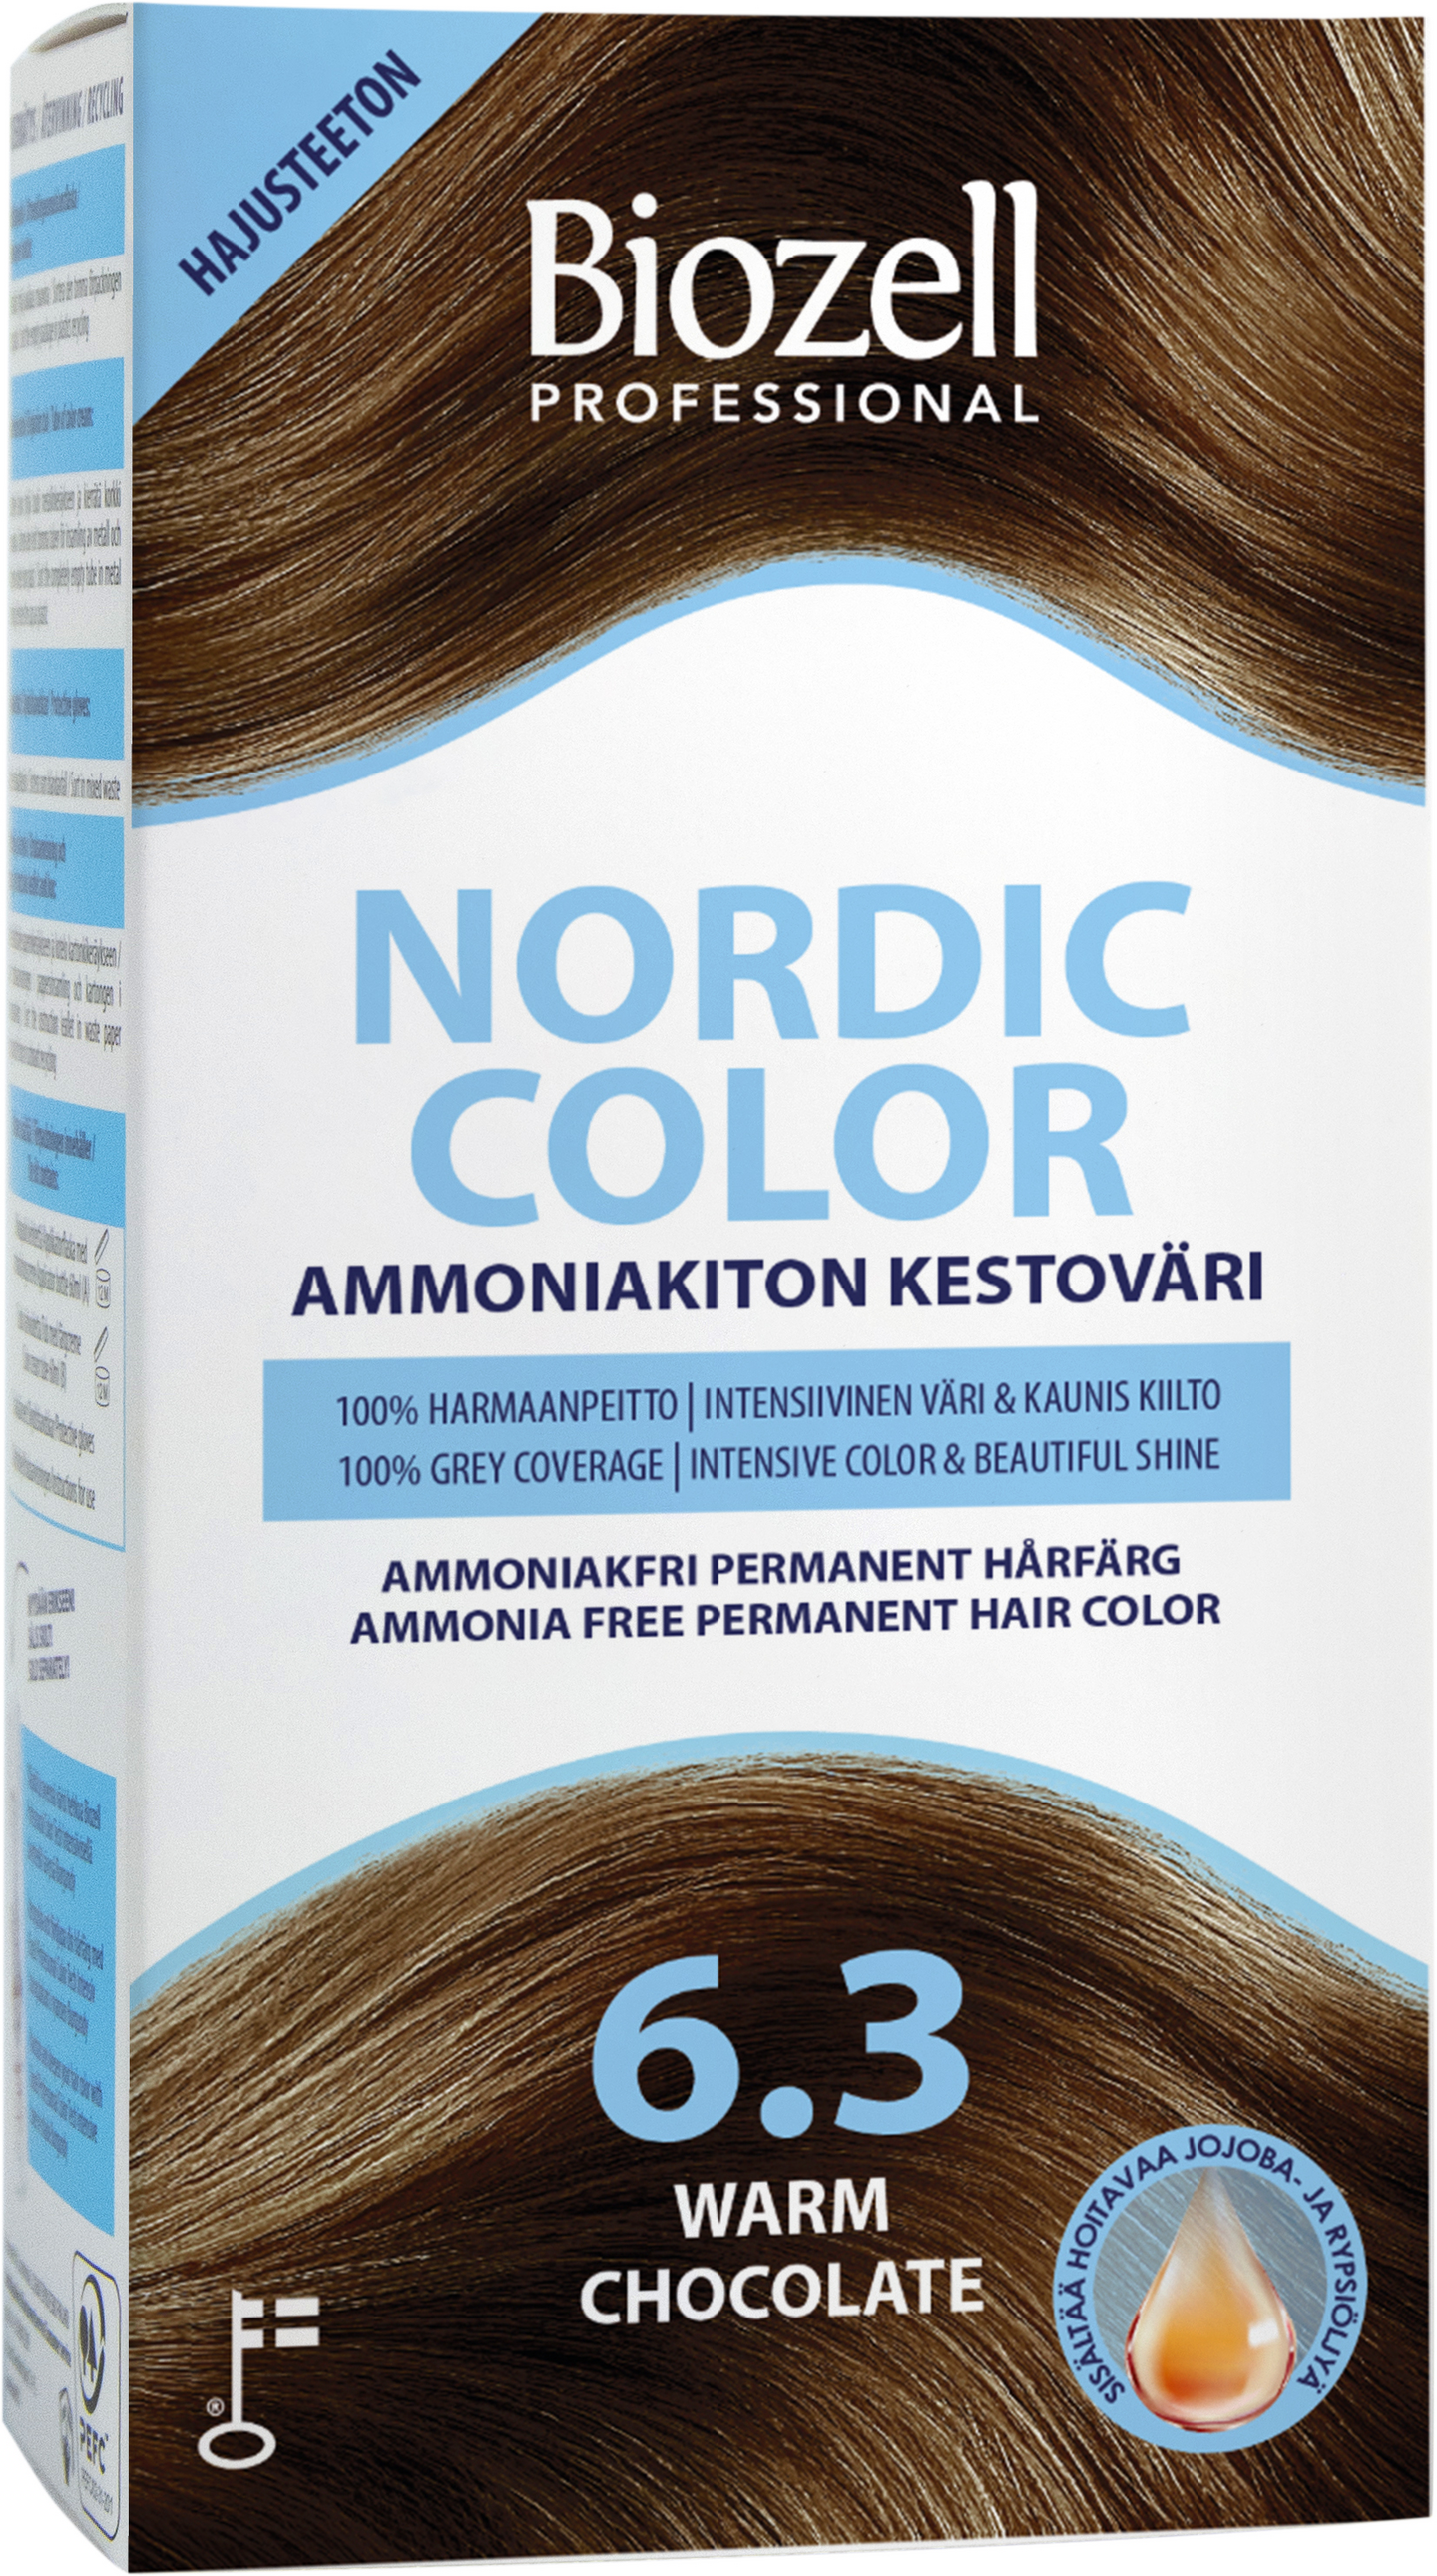 Biozell Professional Nordic Color kestoväri 6.3 2x60ml Chocolate Warm ammoniakiton